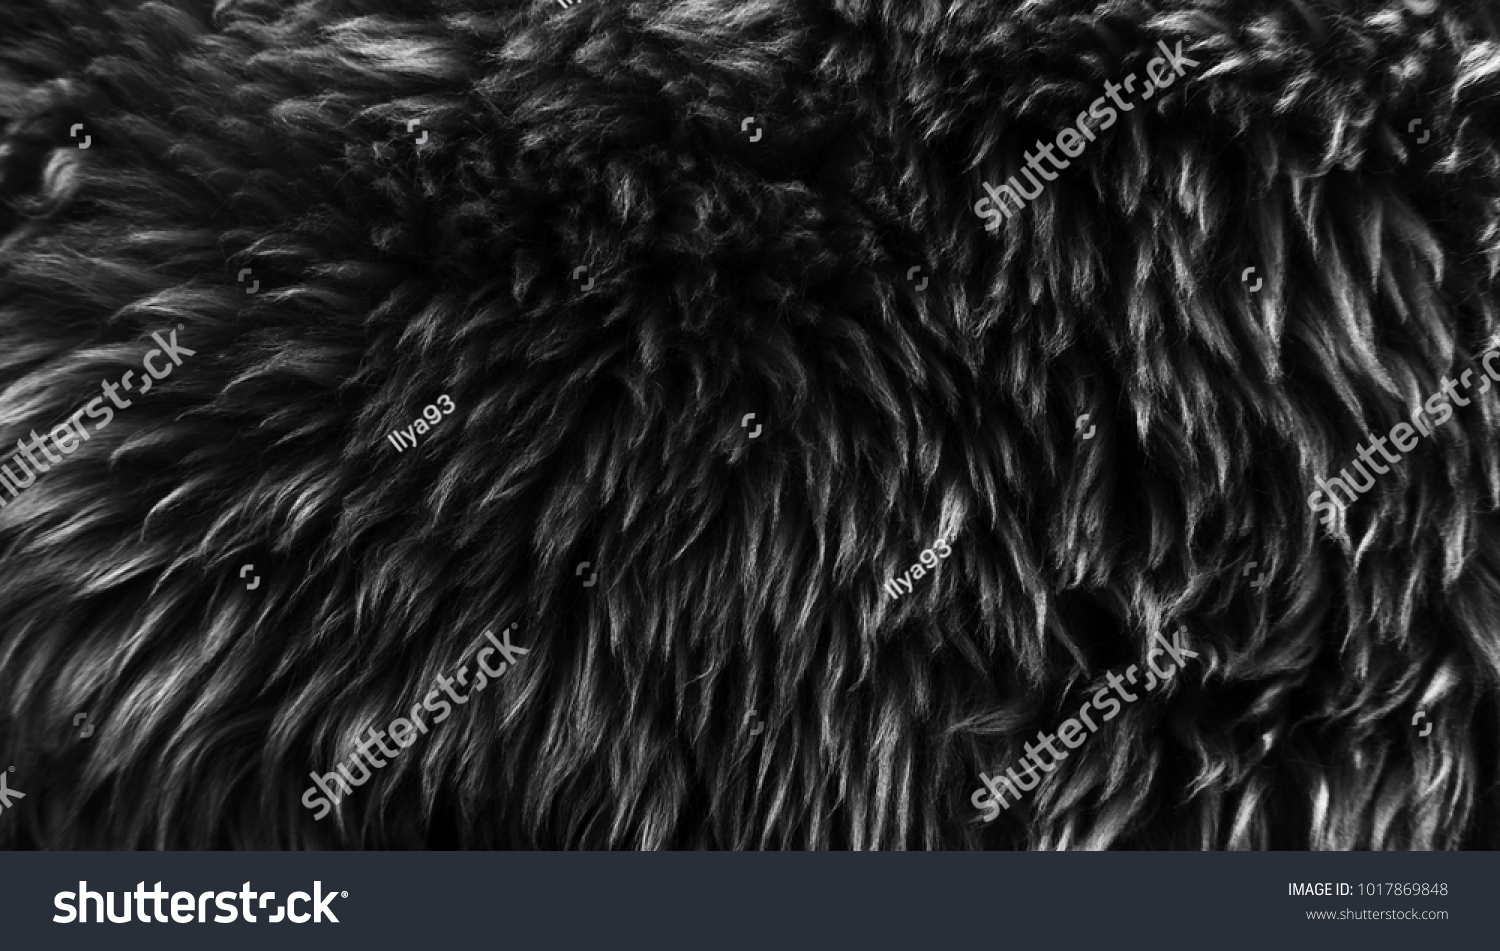 Black Wool Texture Background Dark Natural Stock Photo 1017869848 ...